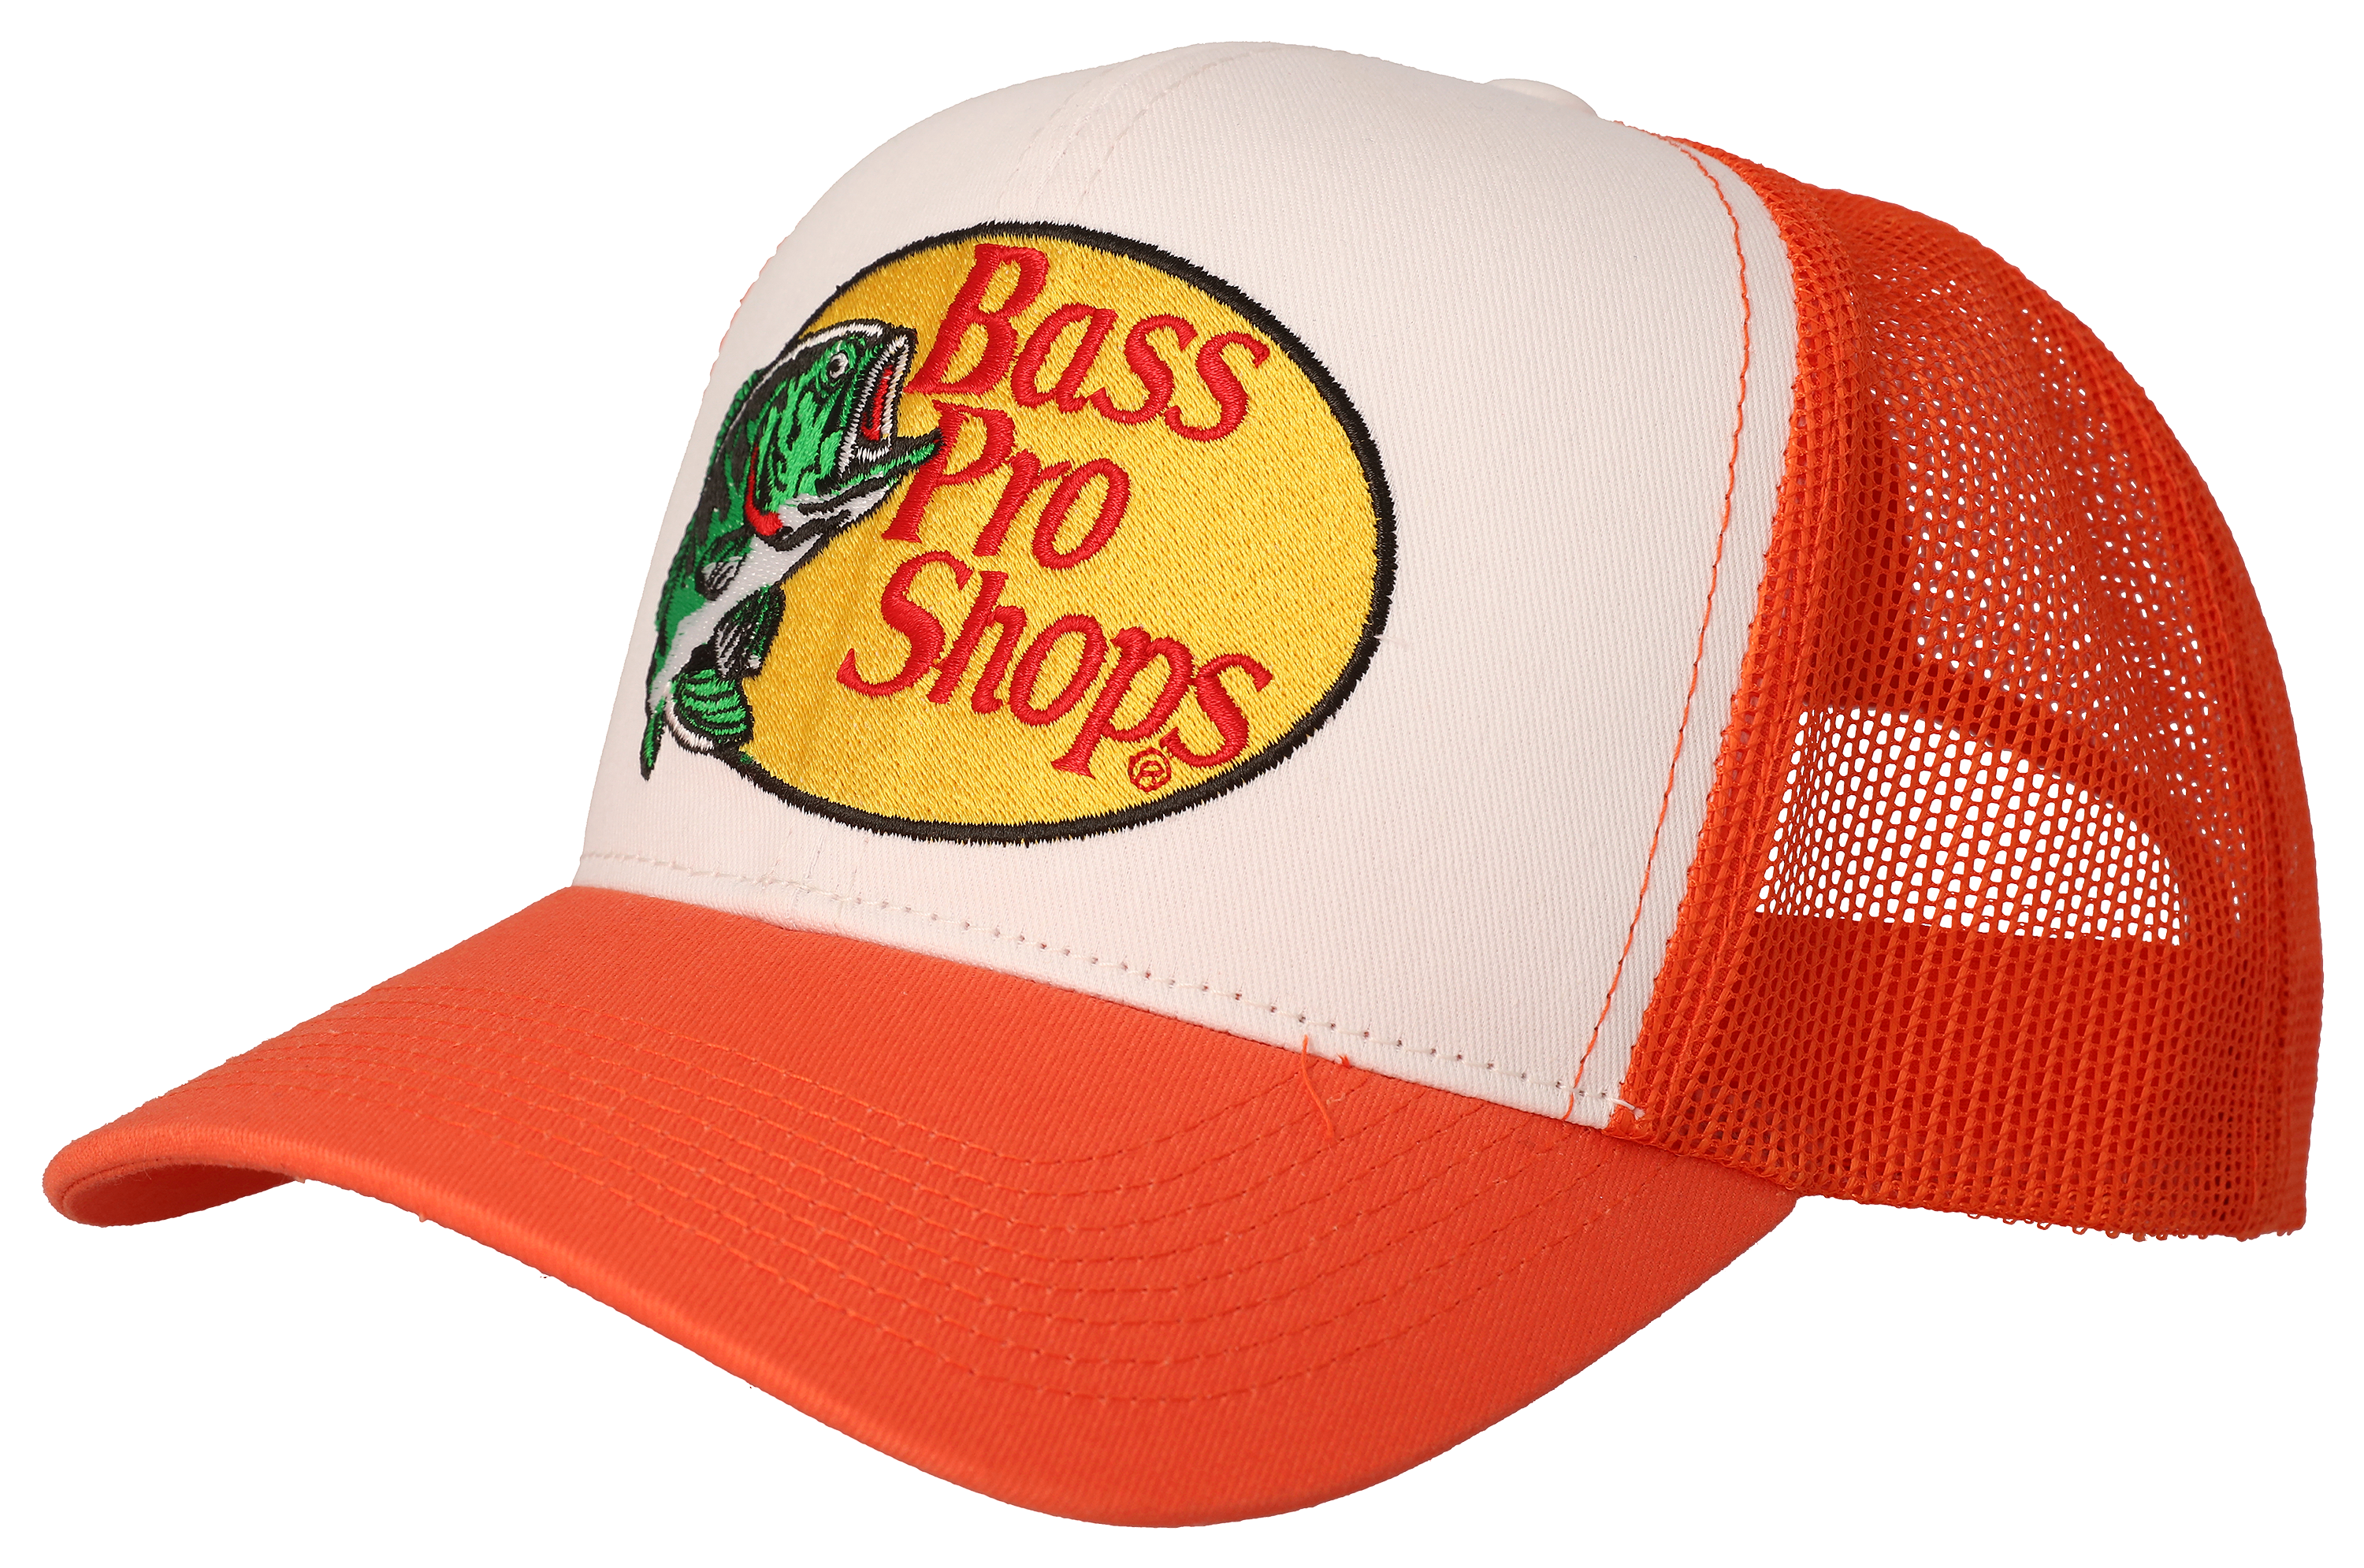 Bass Pro Shops Embroidered Logo Mesh-Back Cap